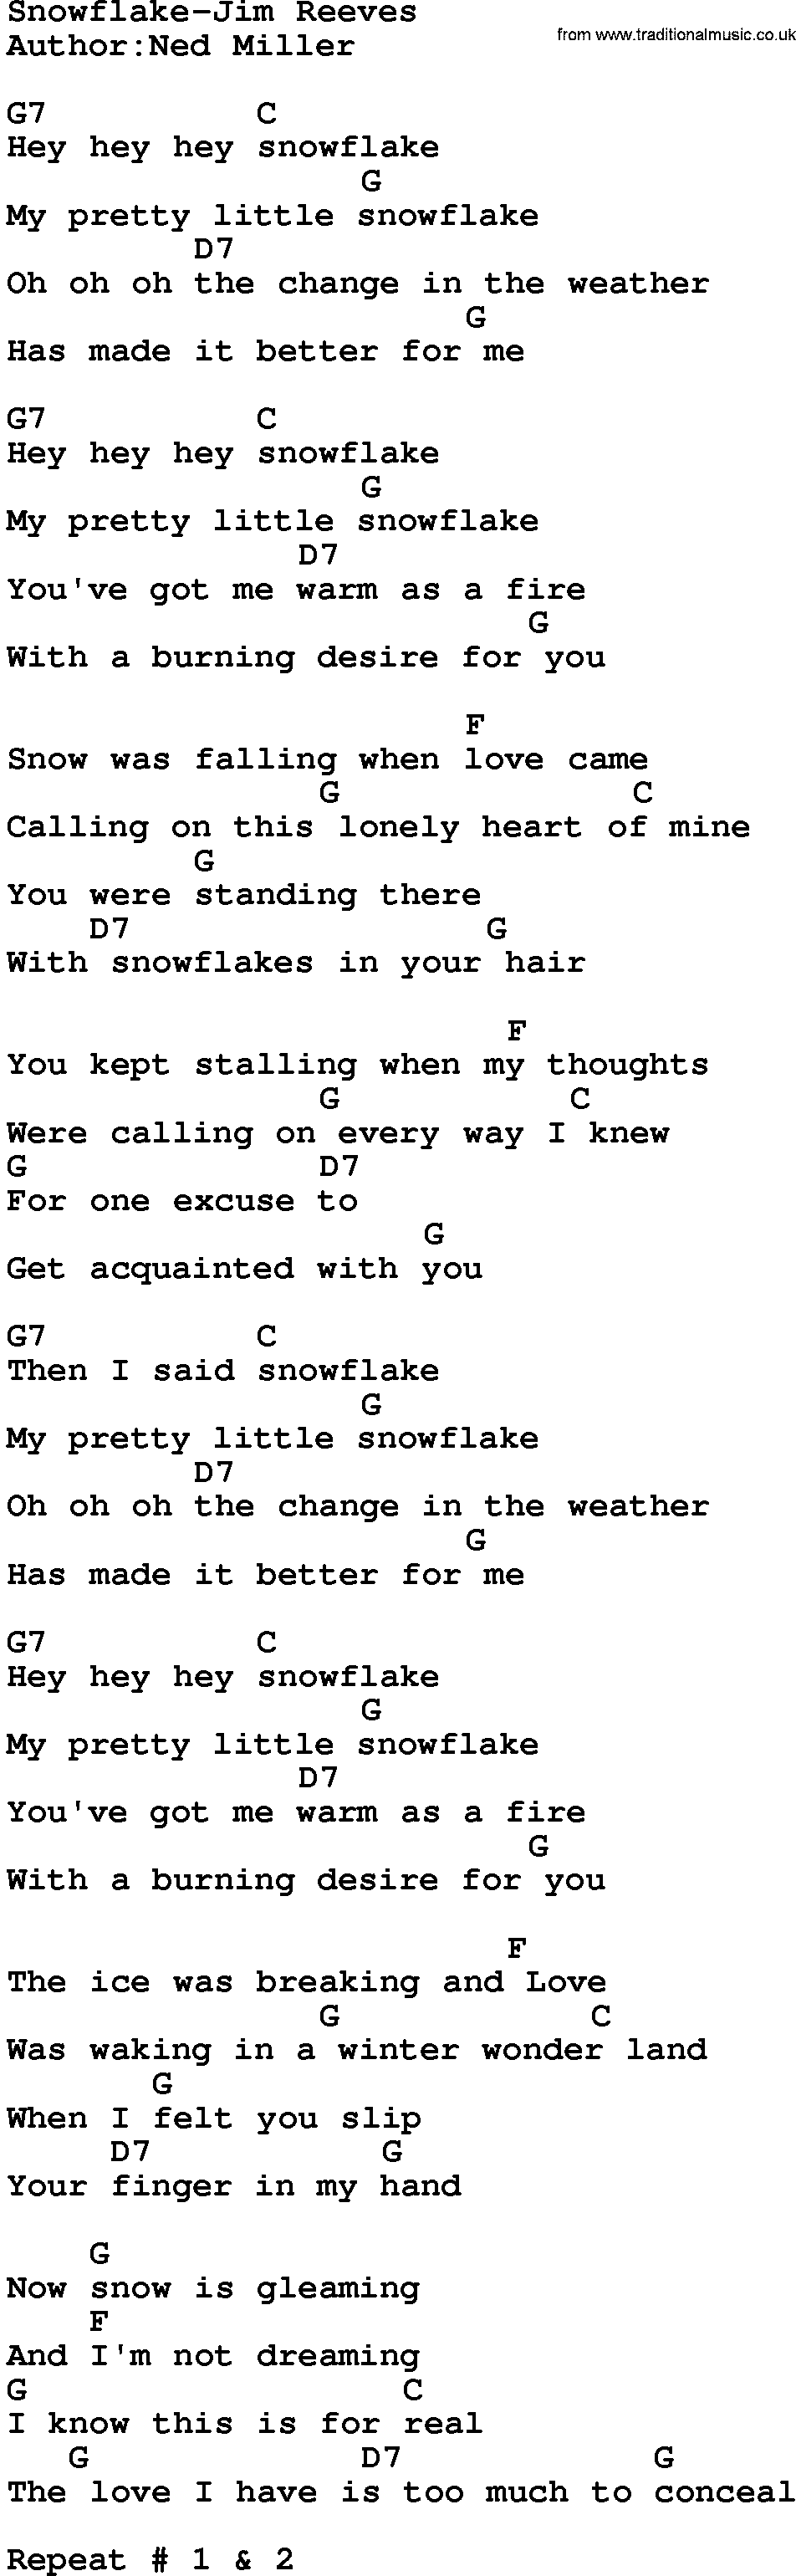 Country music song: Snowflake-Jim Reeves lyrics and chords